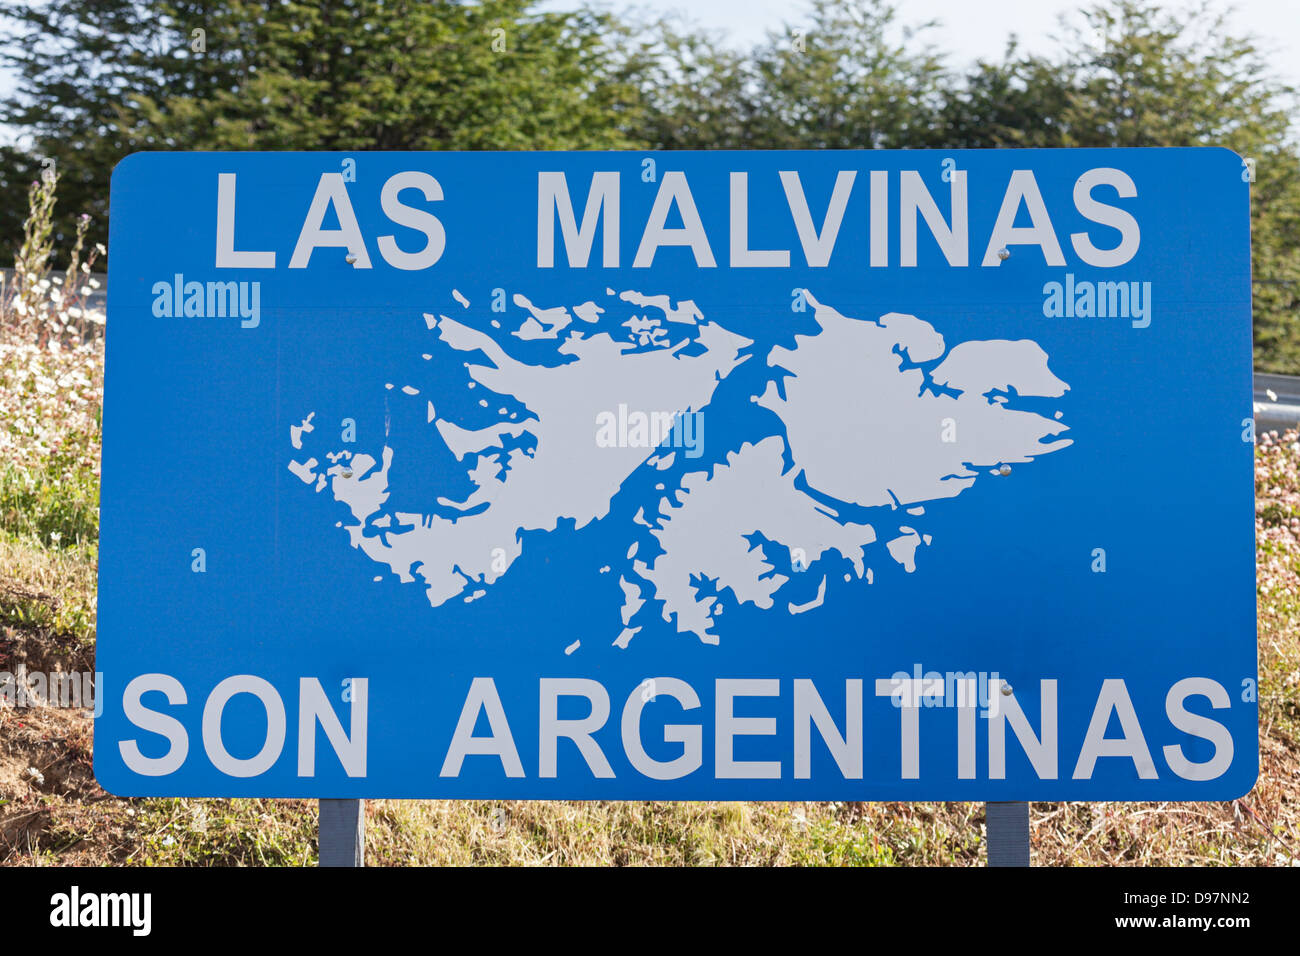 Las Malvinas son Argentinas - road sign seen in Argentina Stock Photo -  Alamy